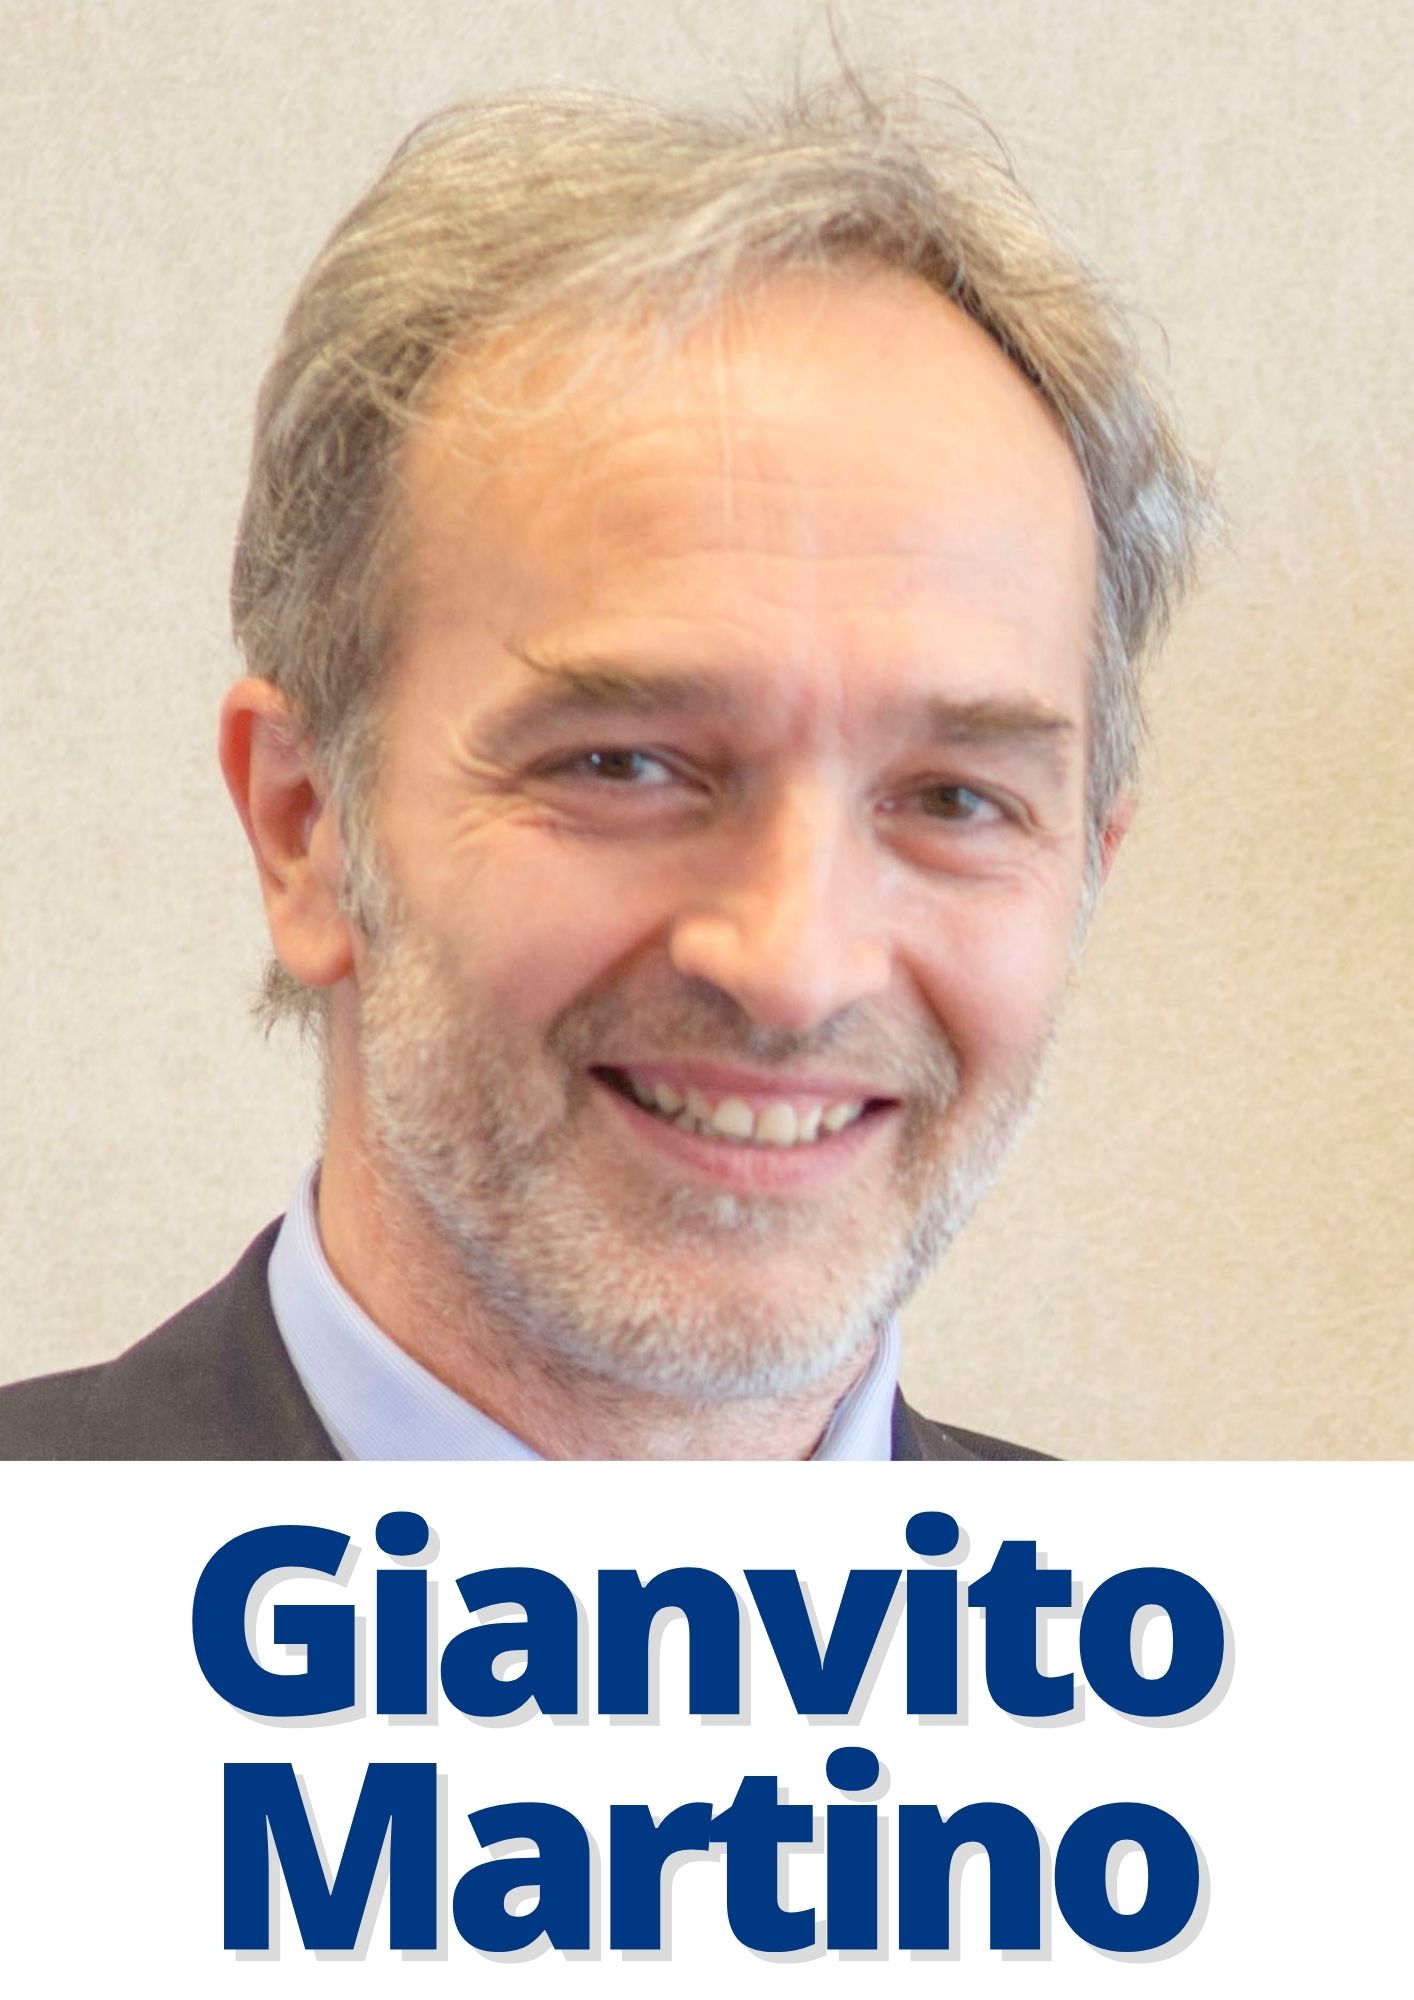 Gianvito Martino